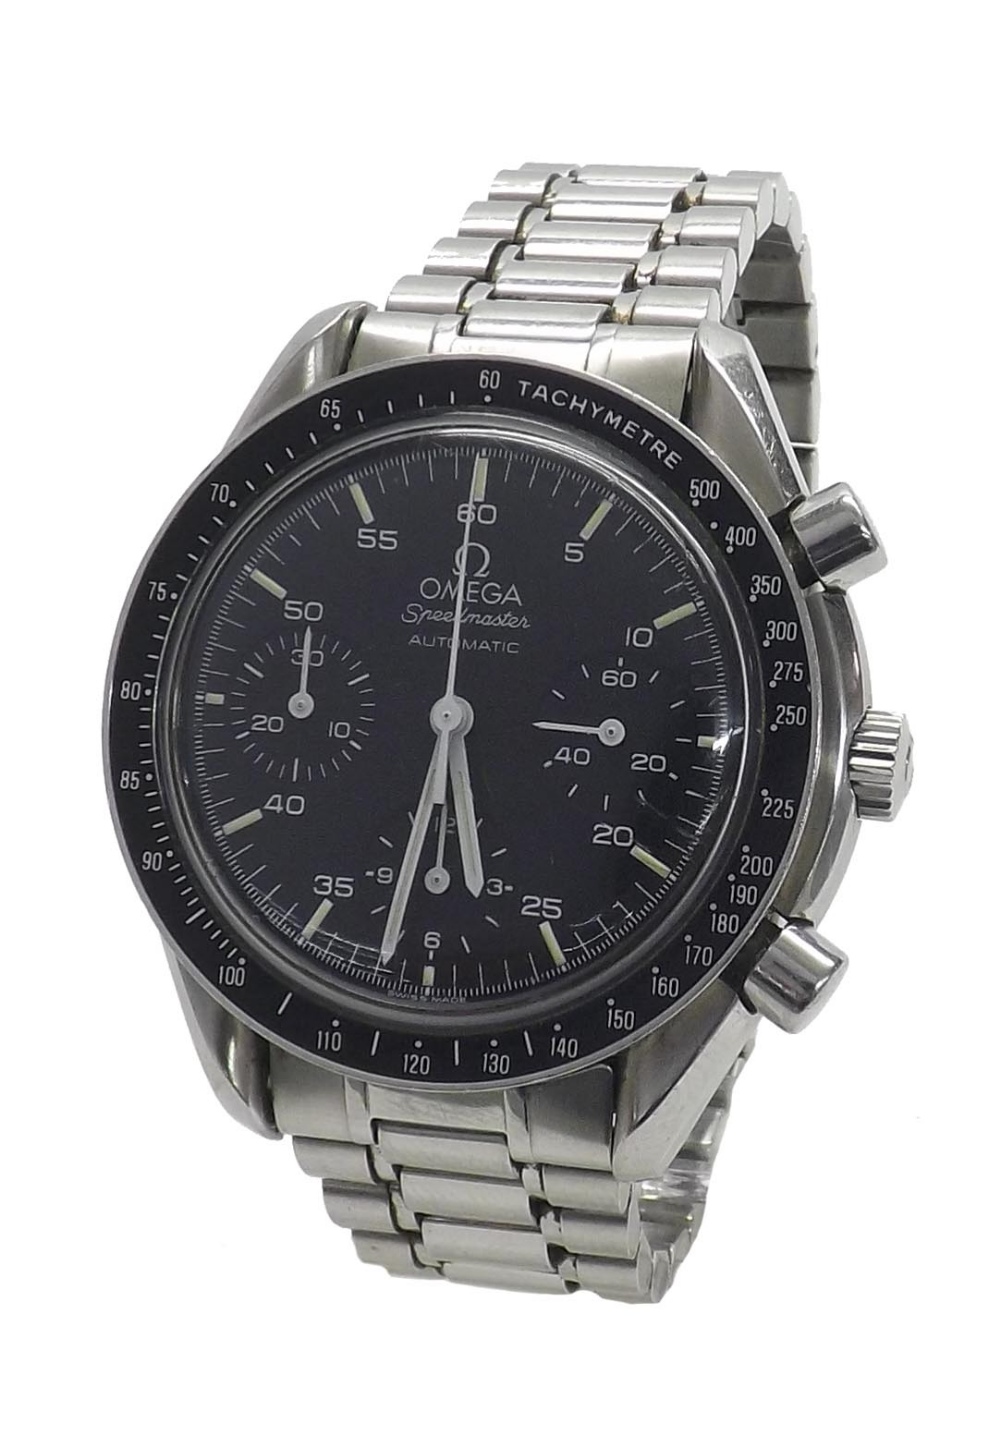 Omega Speedmaster automatic stainless steel gentleman's bracelet watch, circa 1991/2, ref. 175 0032,